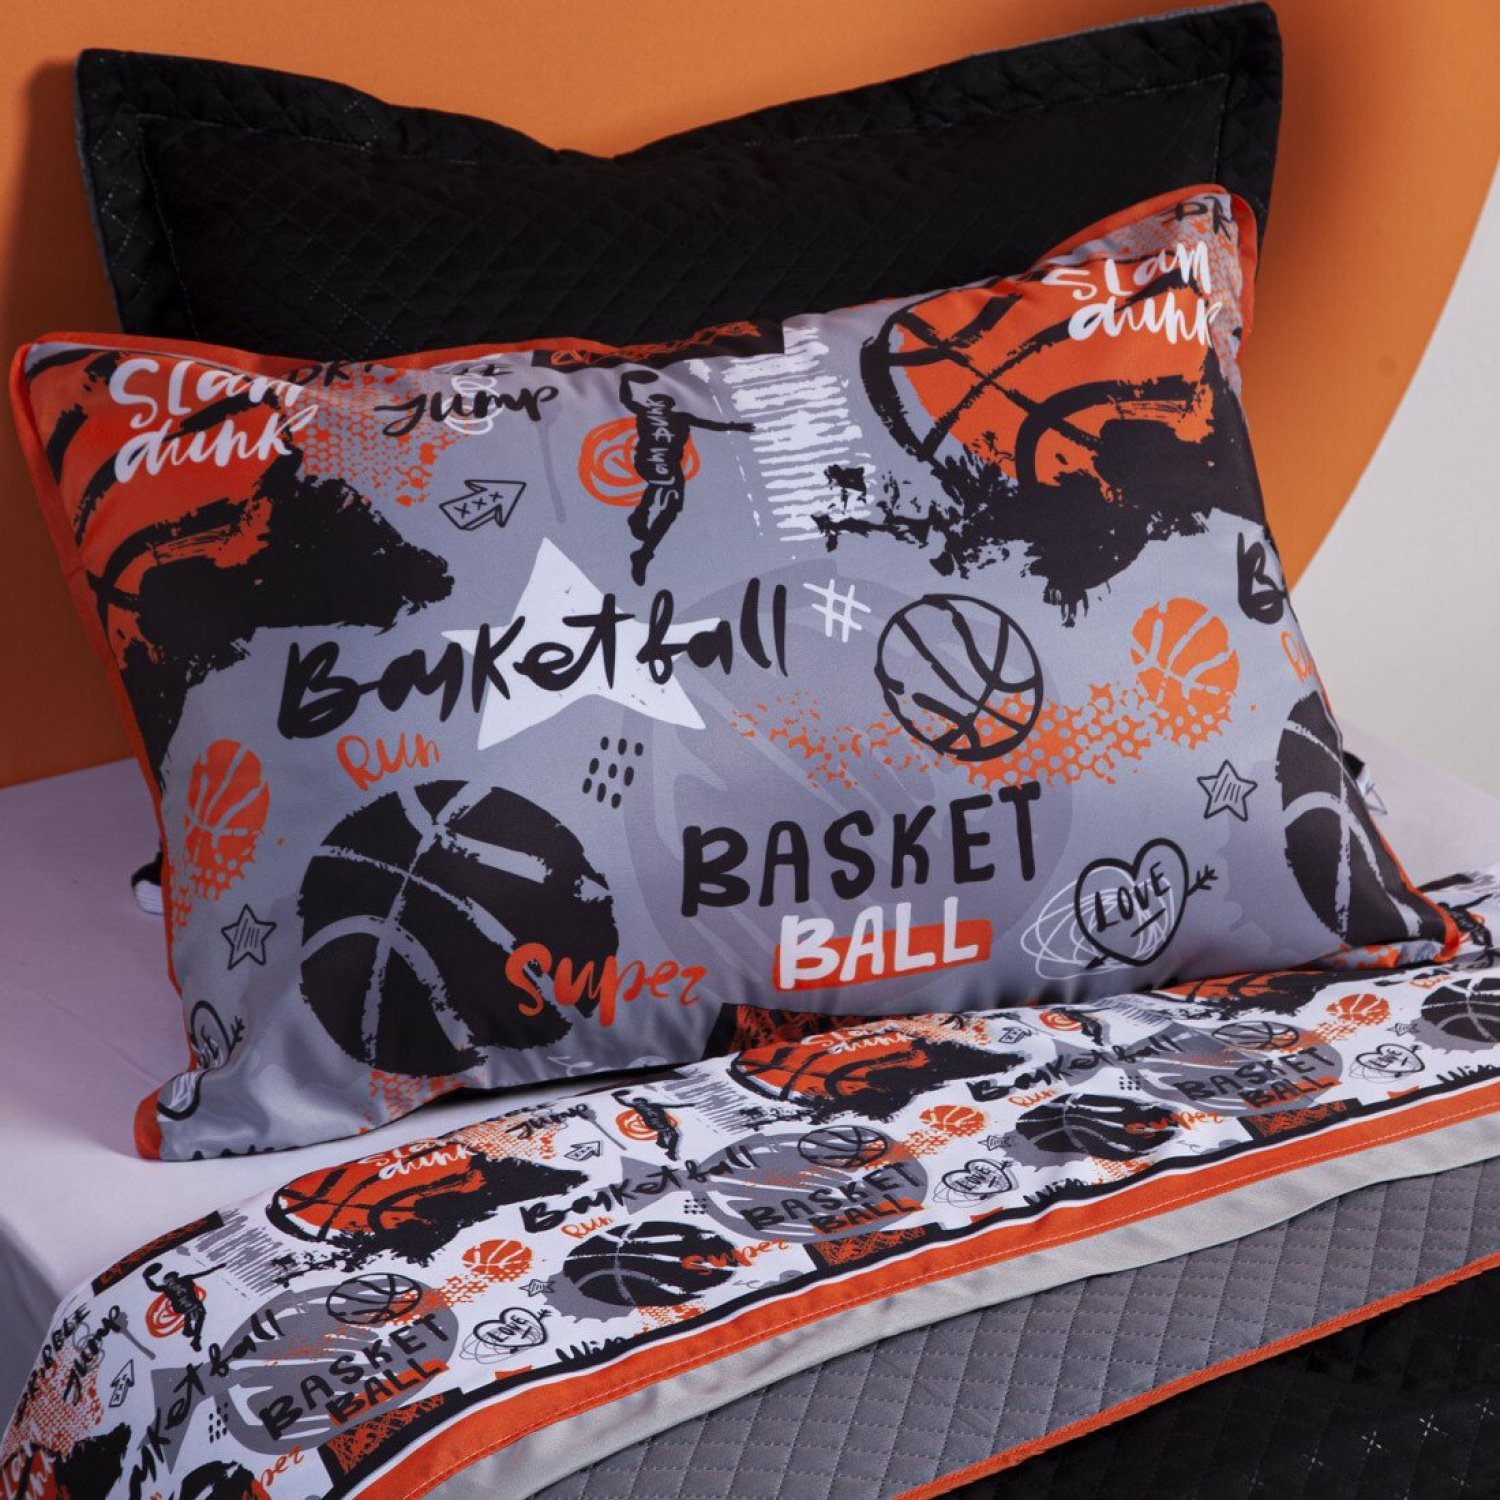 Erosebridal Conjunto de roupa de cama de basquete, jogo de cama de